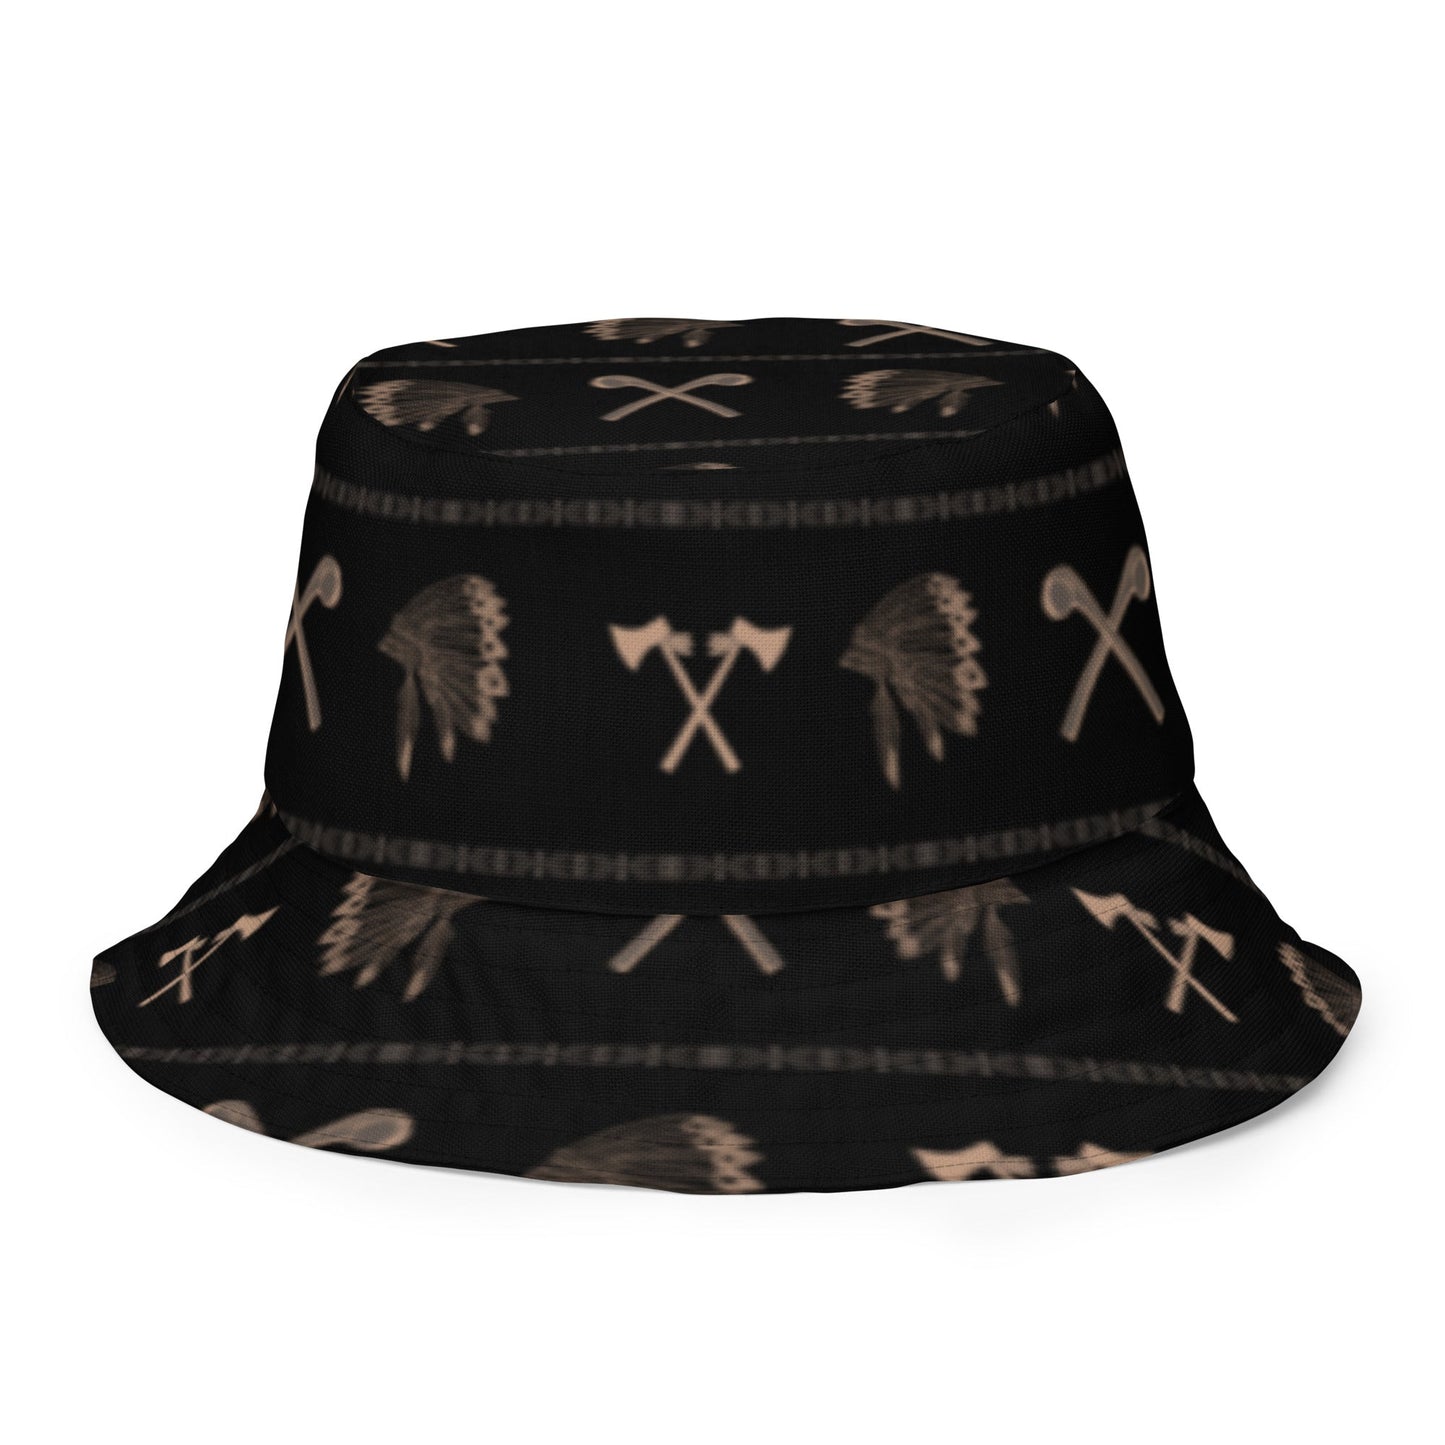 Native Skoden Reversible bucket hat - Nikikw Designs